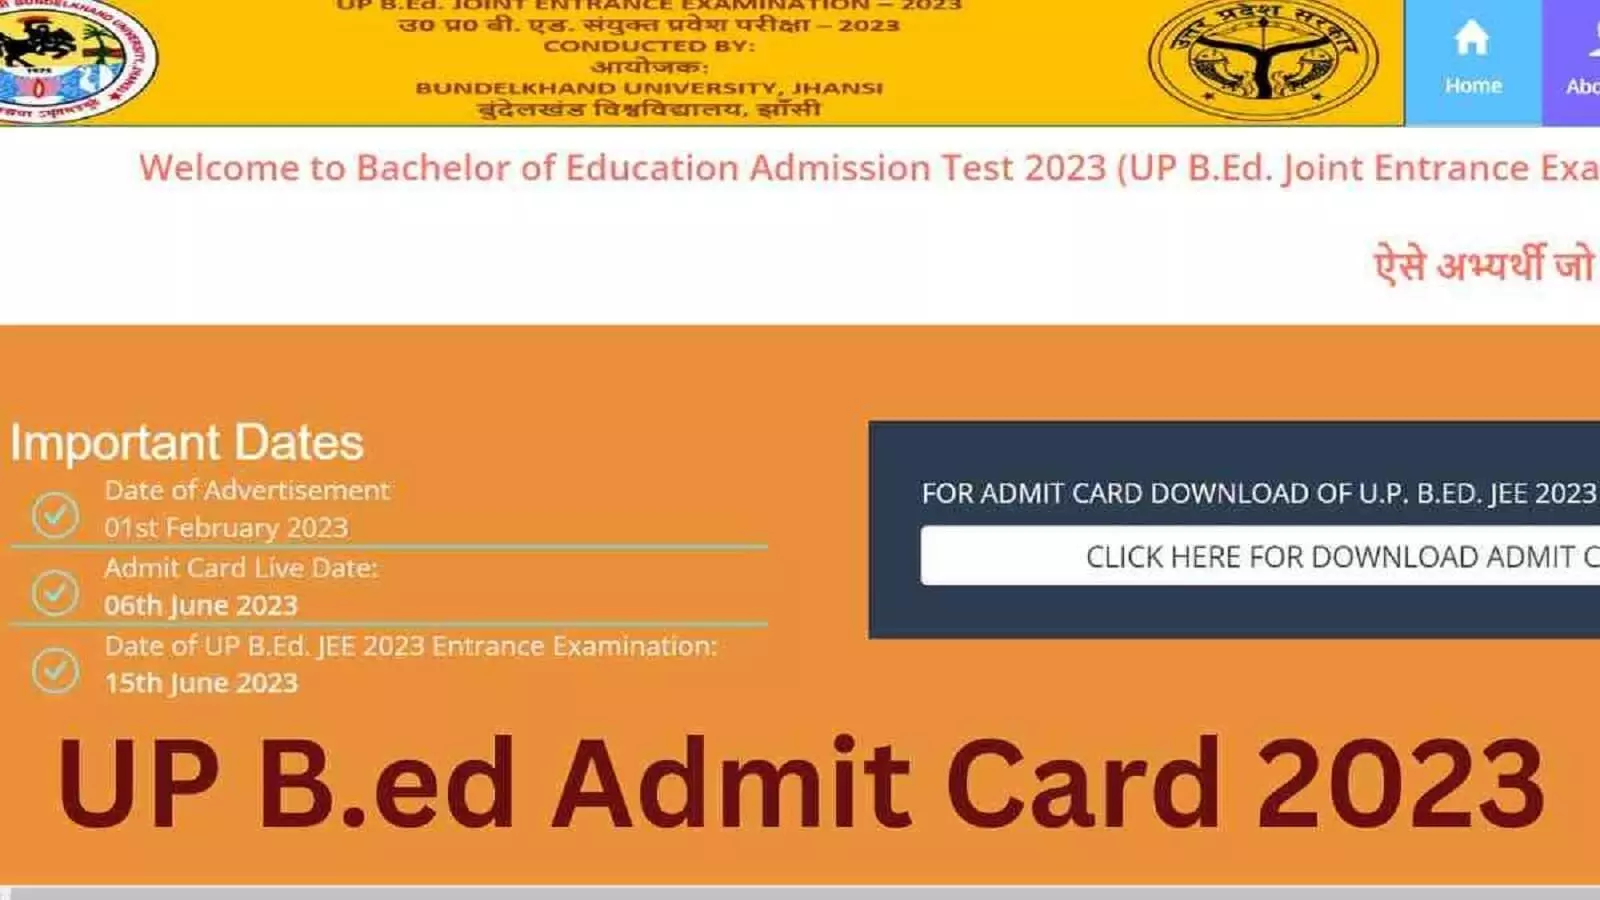 UP BED 2023 Admit Card Direct Link: Bundelkhand University की वेबसाइट से ऐसे करें Download